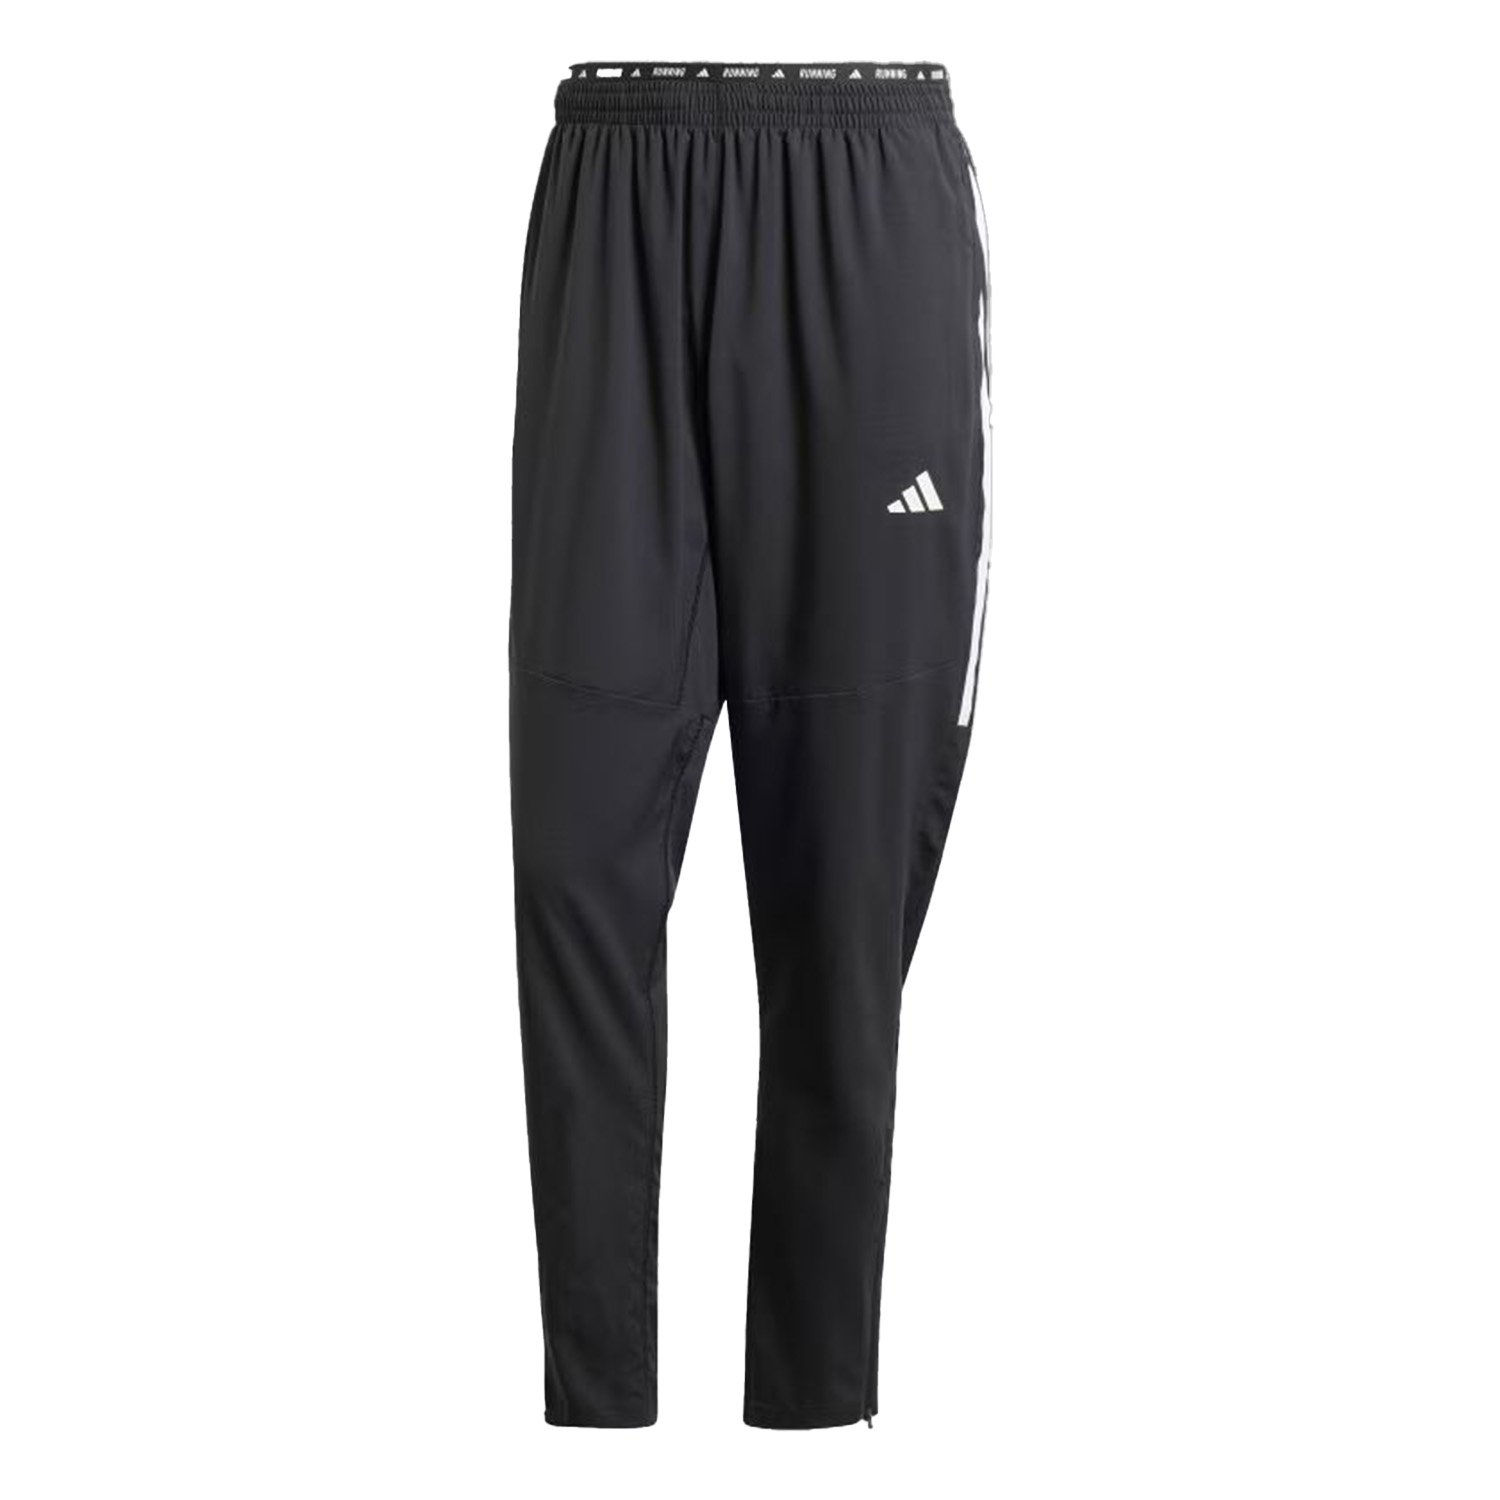 Adidas Otr 3S Erkek Koşu Pantolonu - Siyah - 1